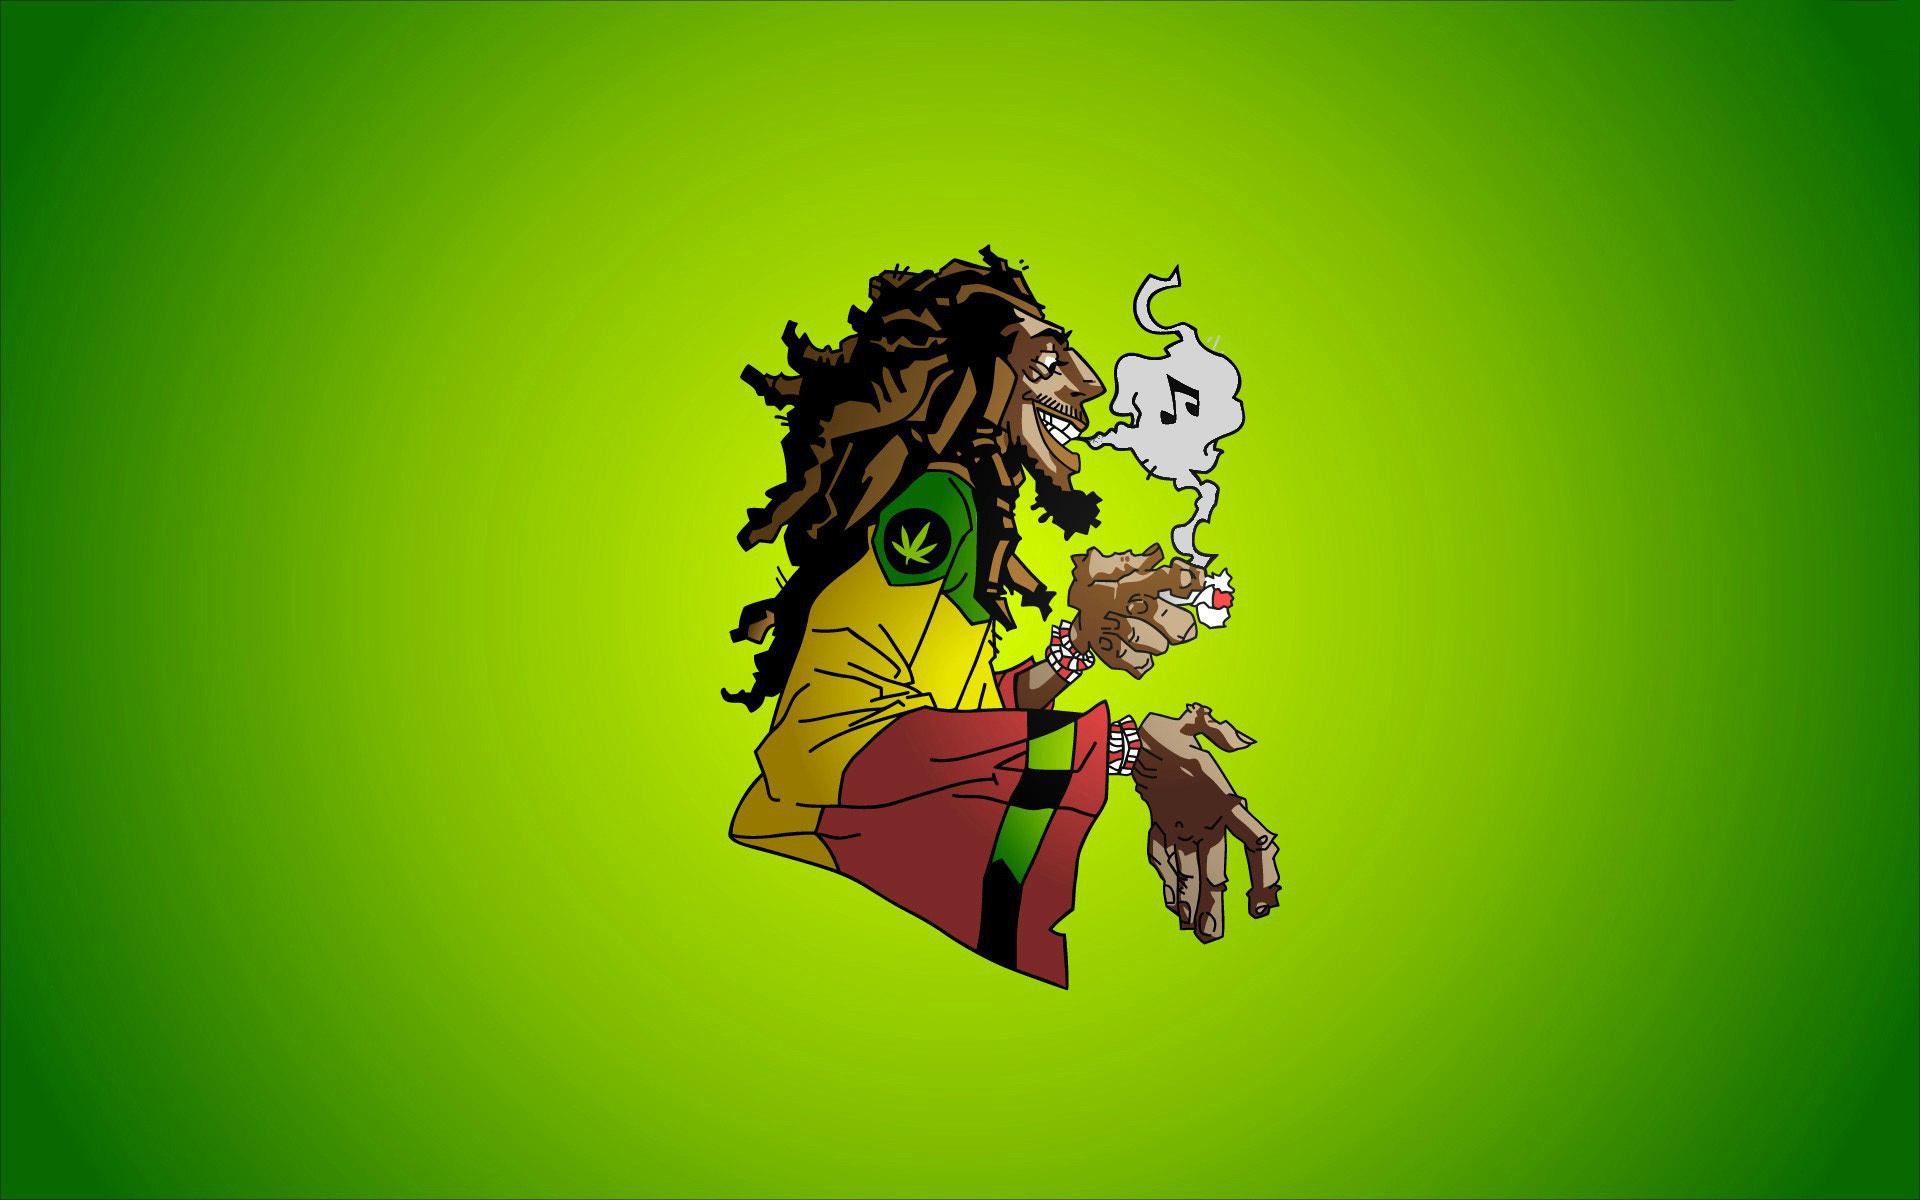 bob, Marley, Reggae, Music, Caricature, Smoke, Marijuana, Dreadlocks, Jamaica, Rocksteady, Ska, Weed, Smoke Wallpaper